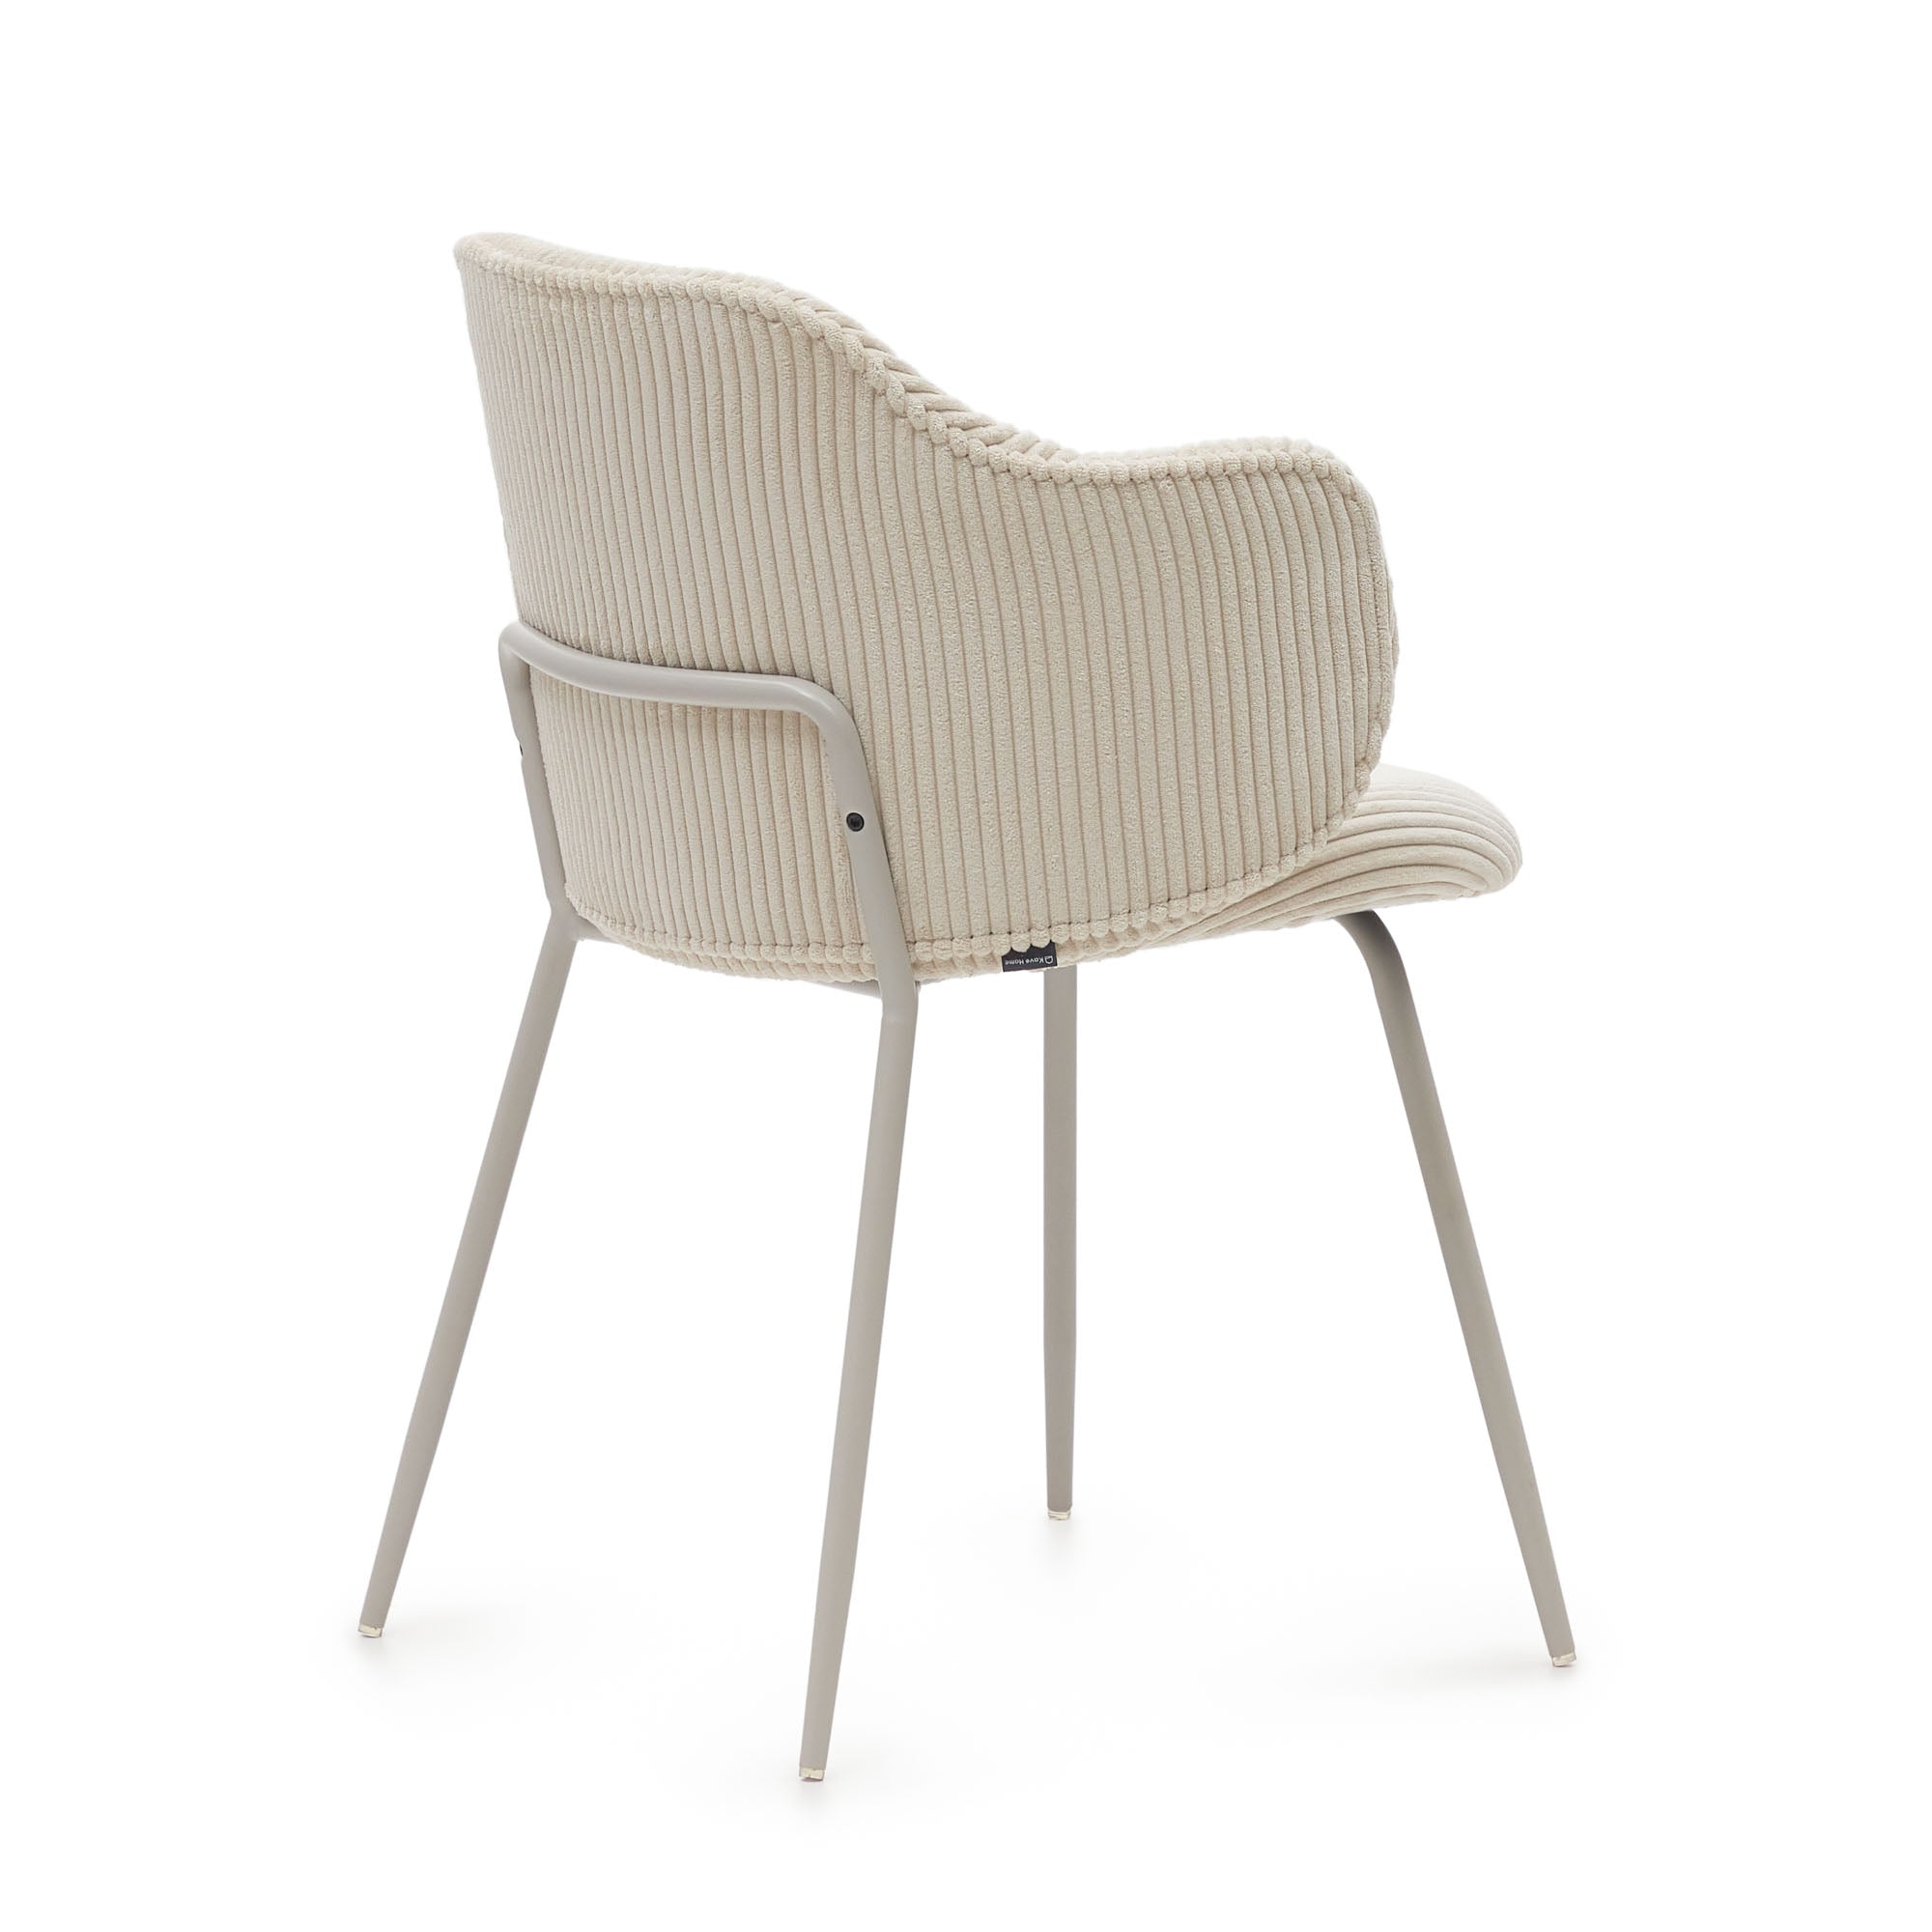 Yunia chair in beige wide seam corduroy with steel legs in a powder coated beige finish